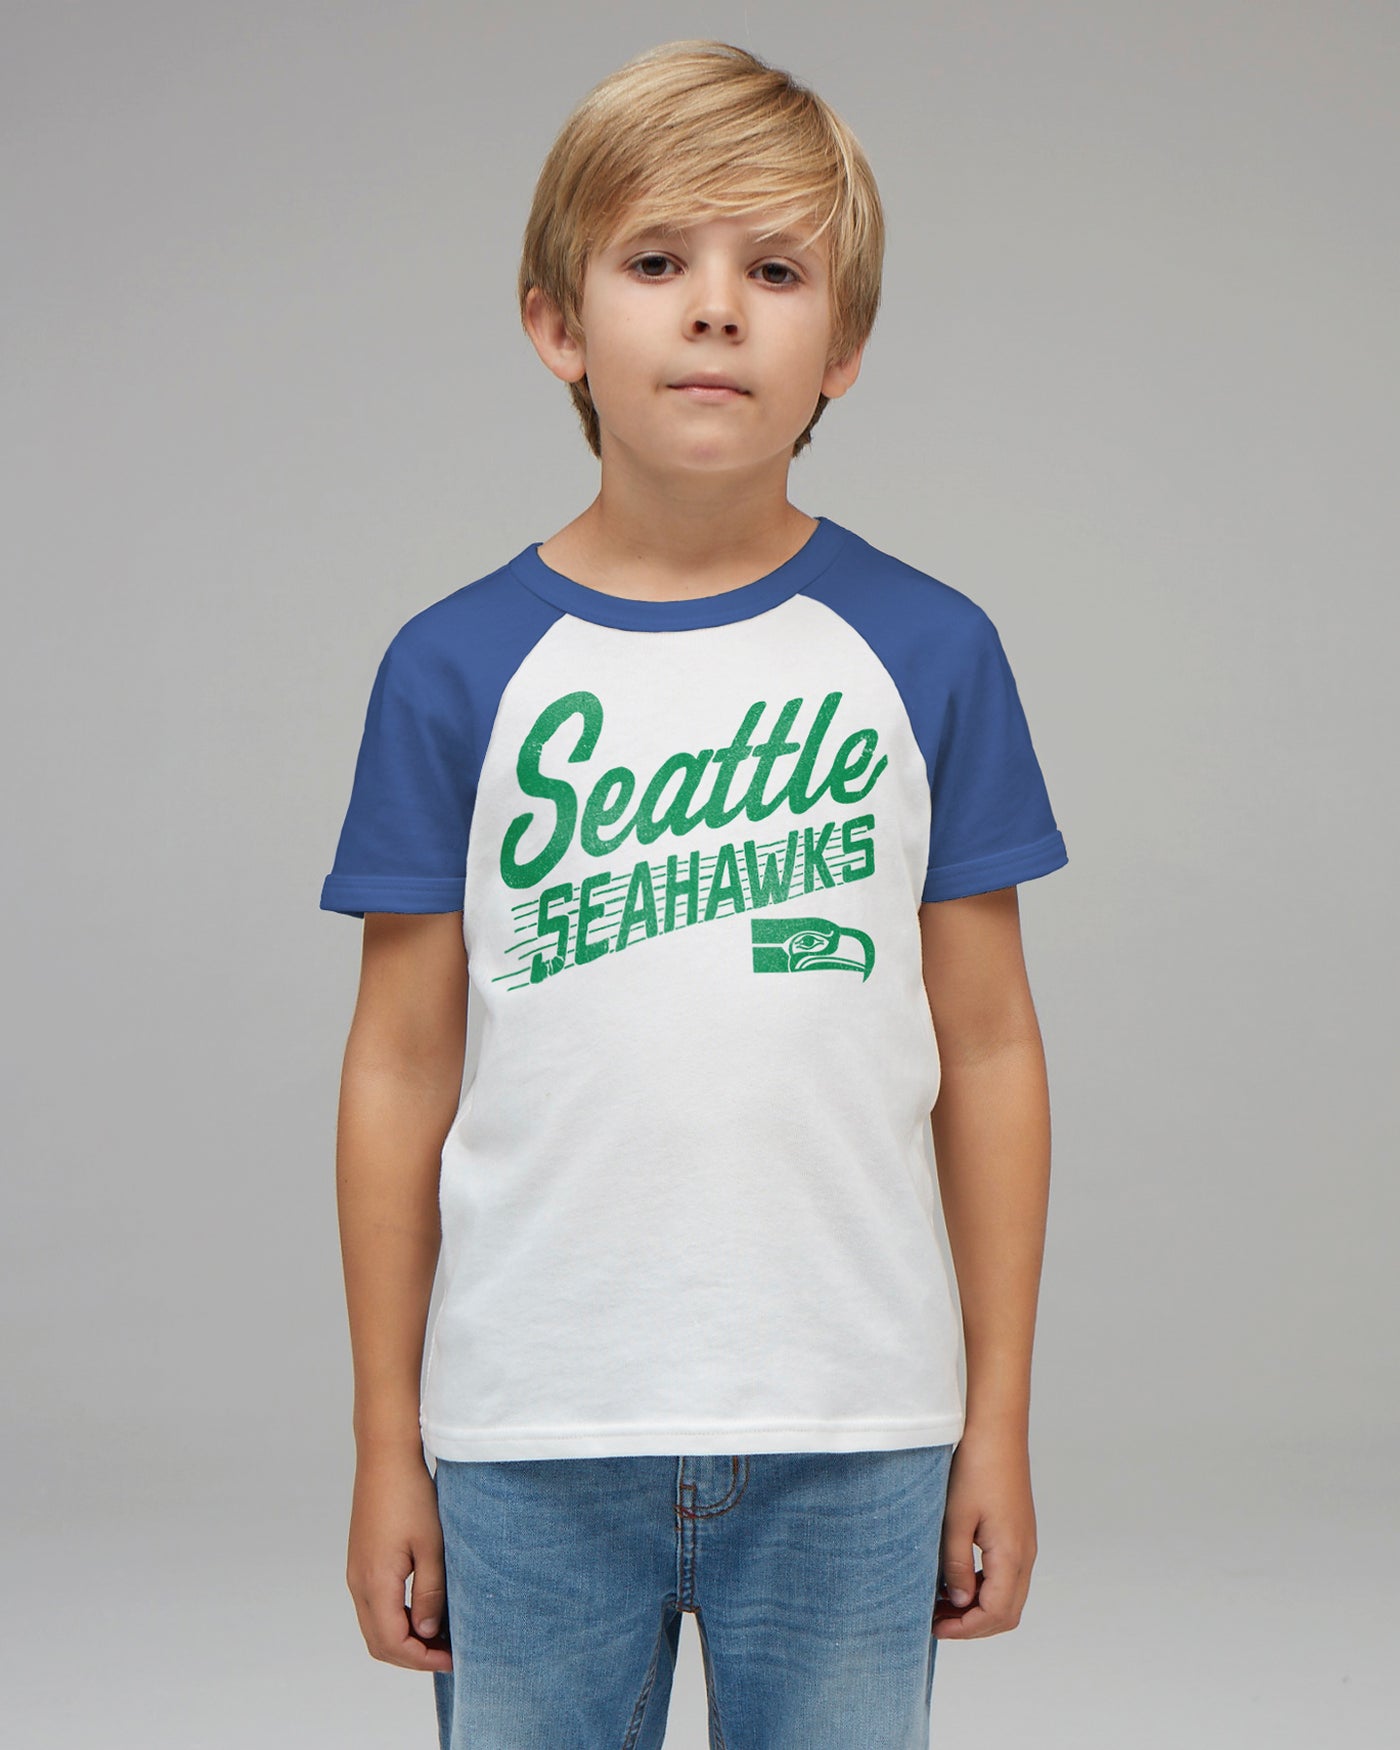 seattle seahawks kids shirts